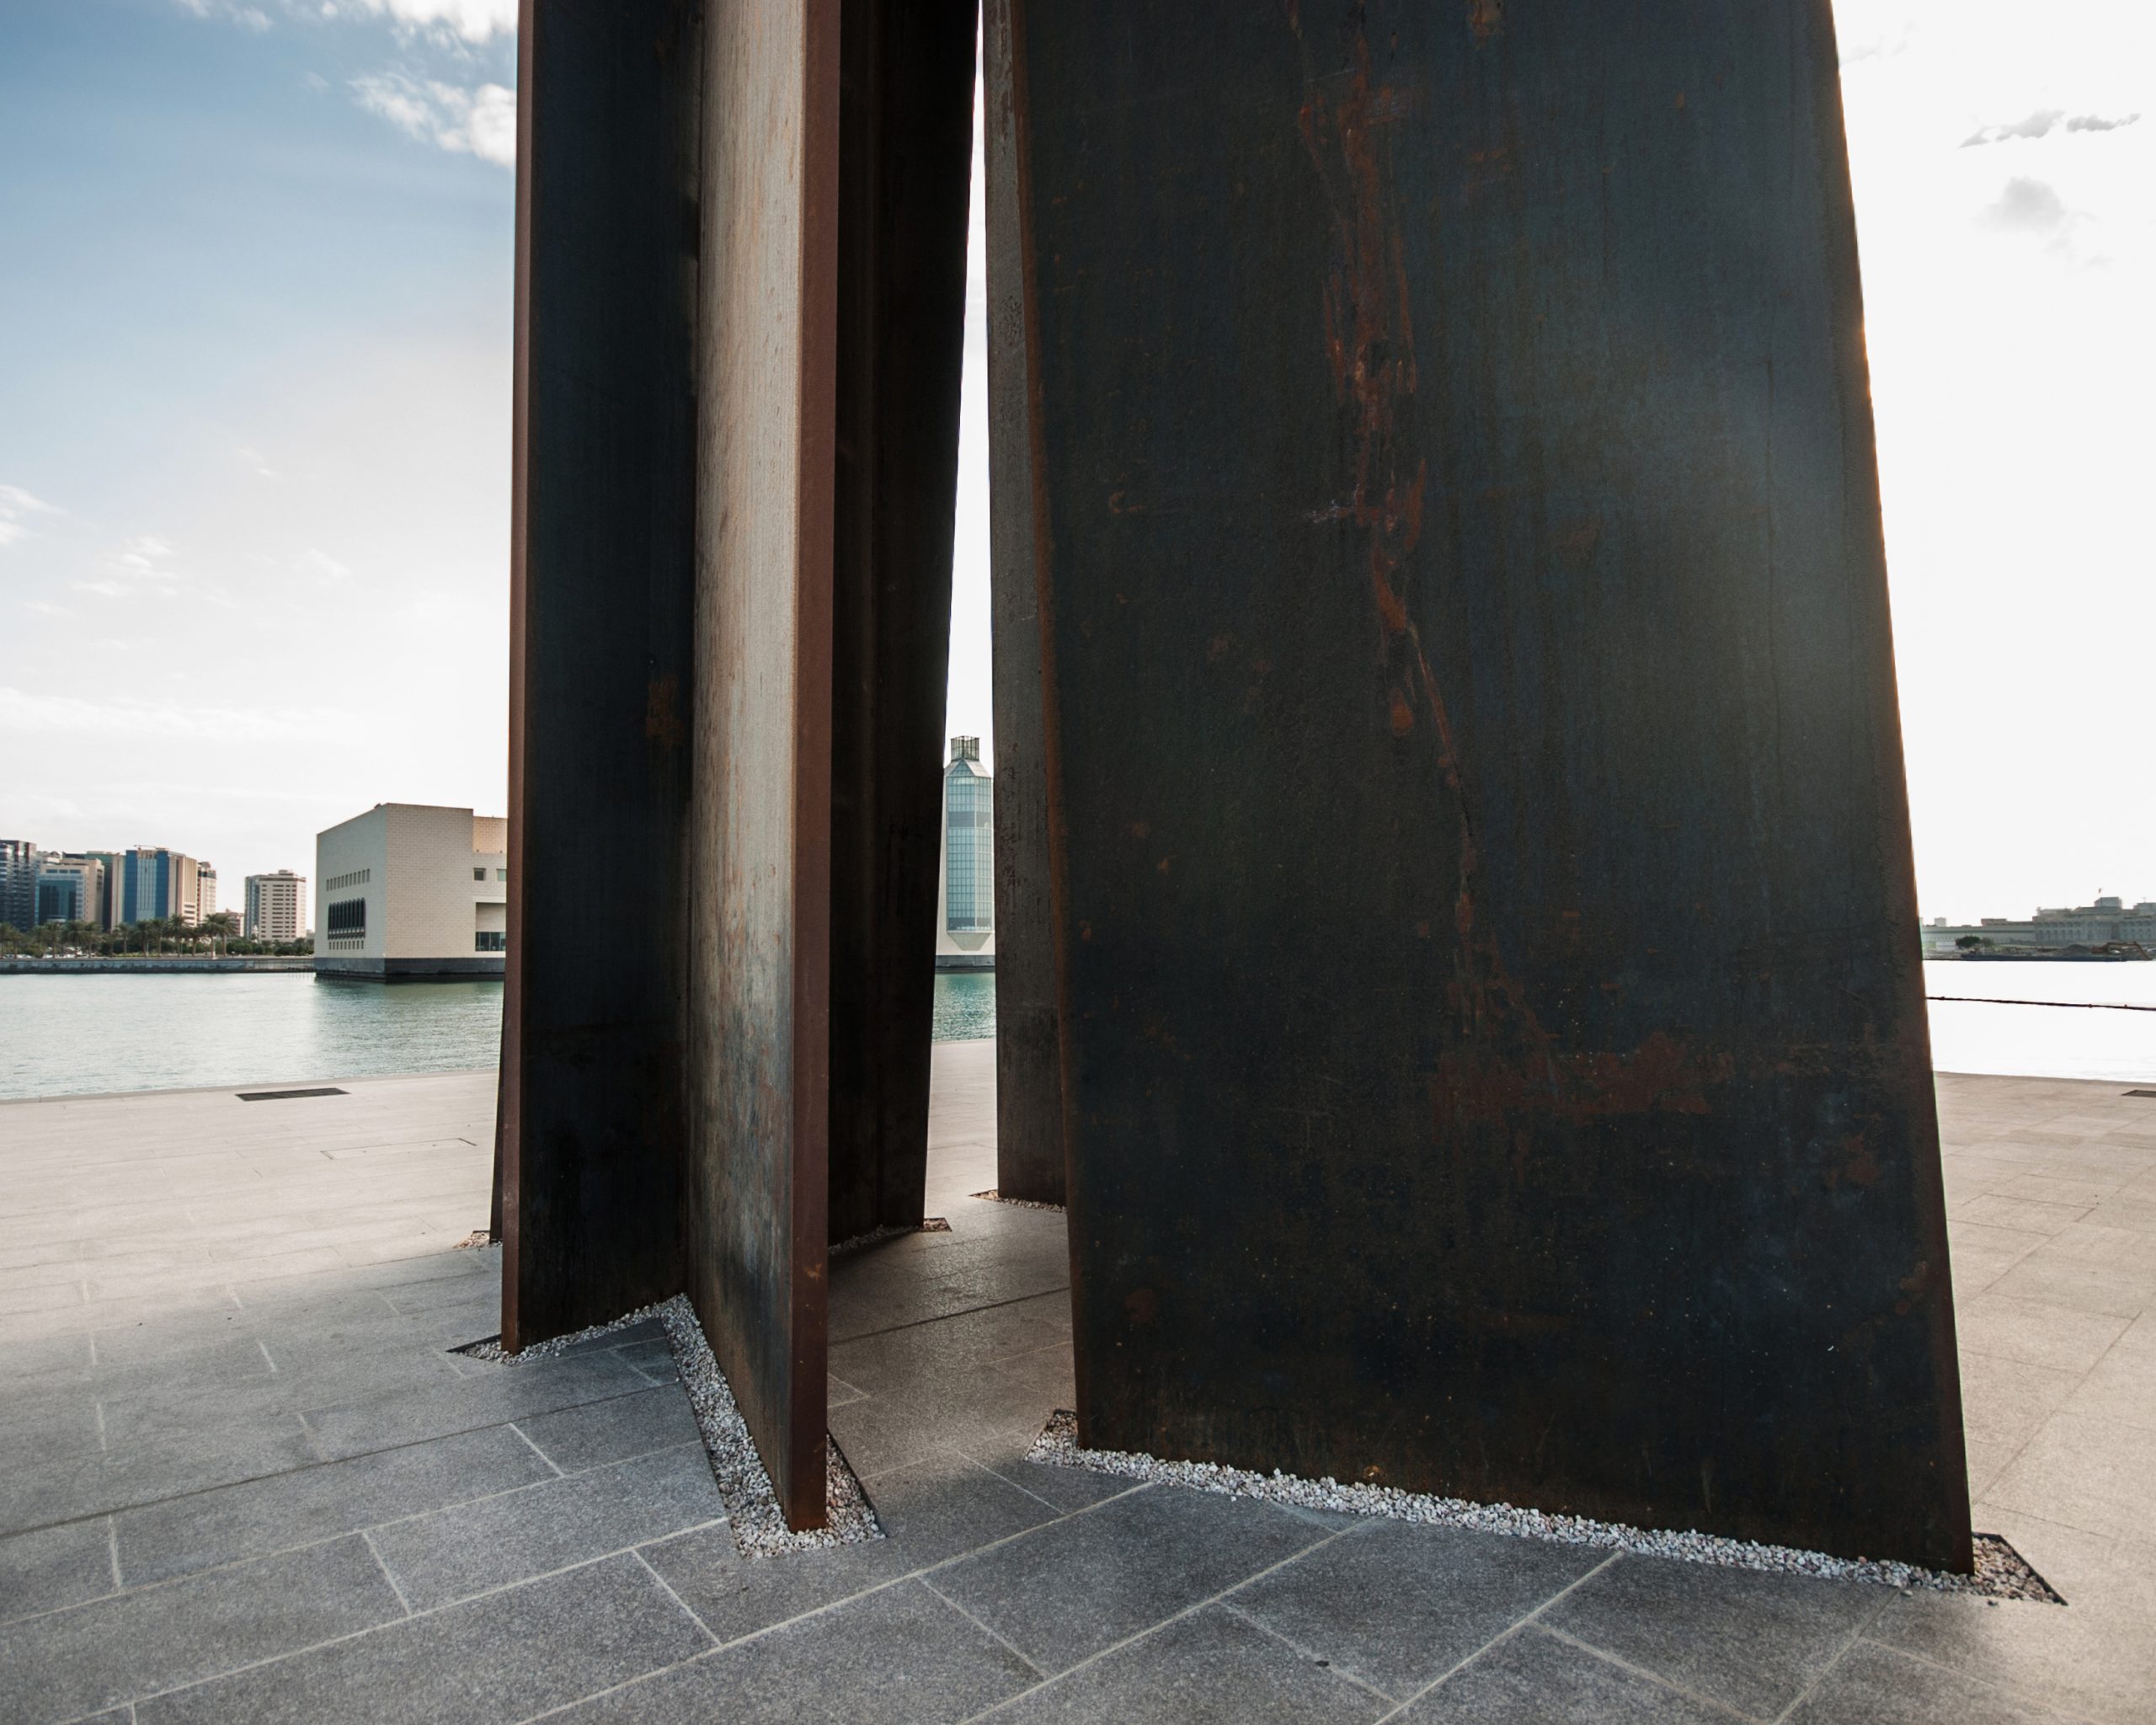 Richard Serra’s ‘7’